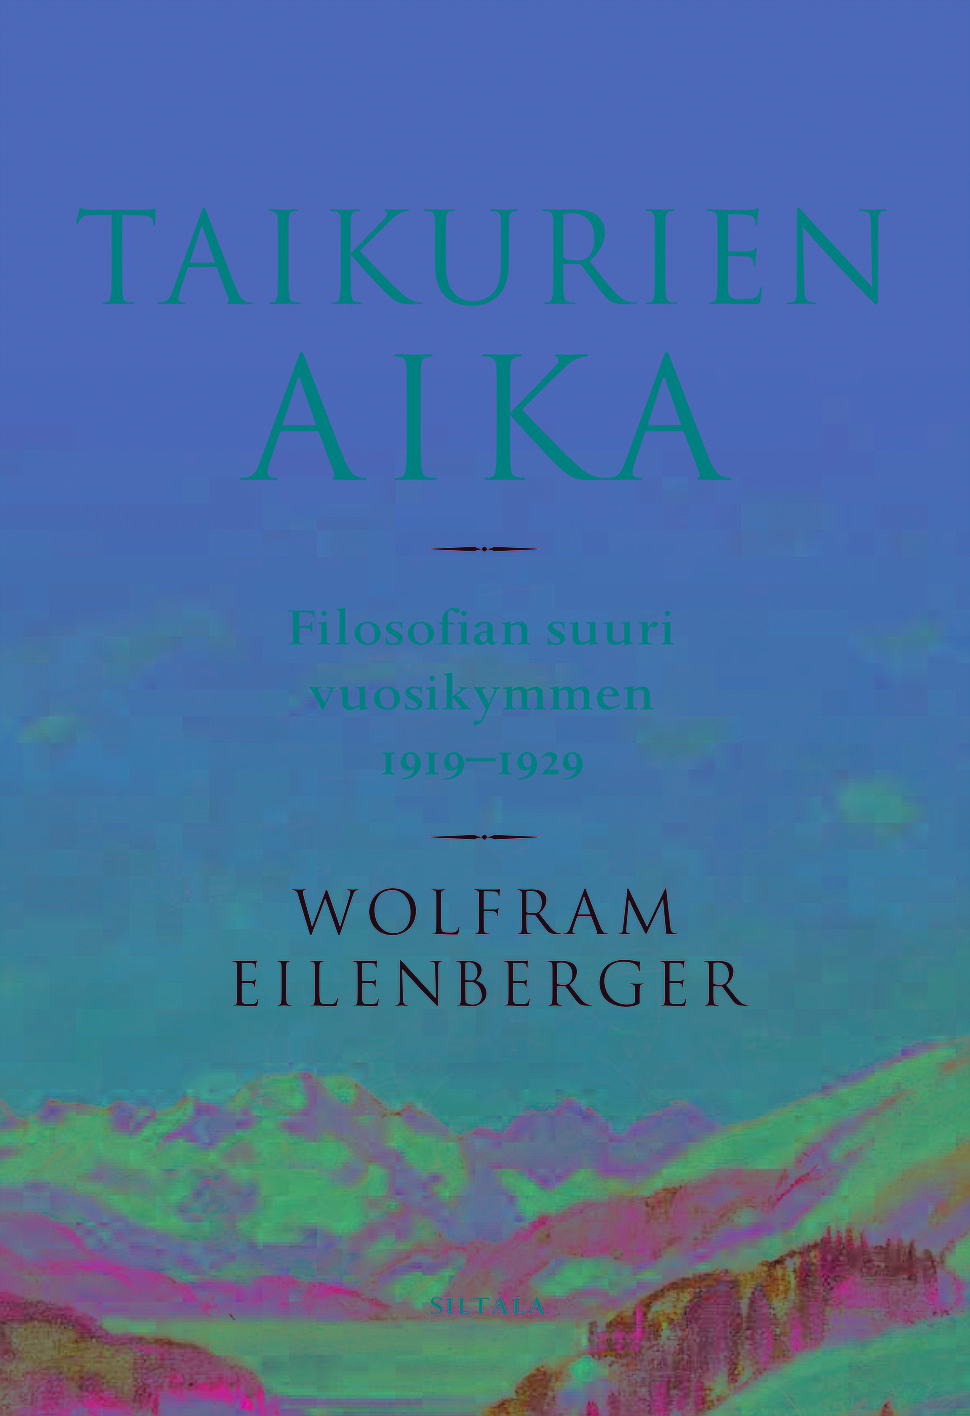 Eilenberger, Wolfram - Taikurien aika: Filosofian suuri vuosikymmen 1919-1929, ebook